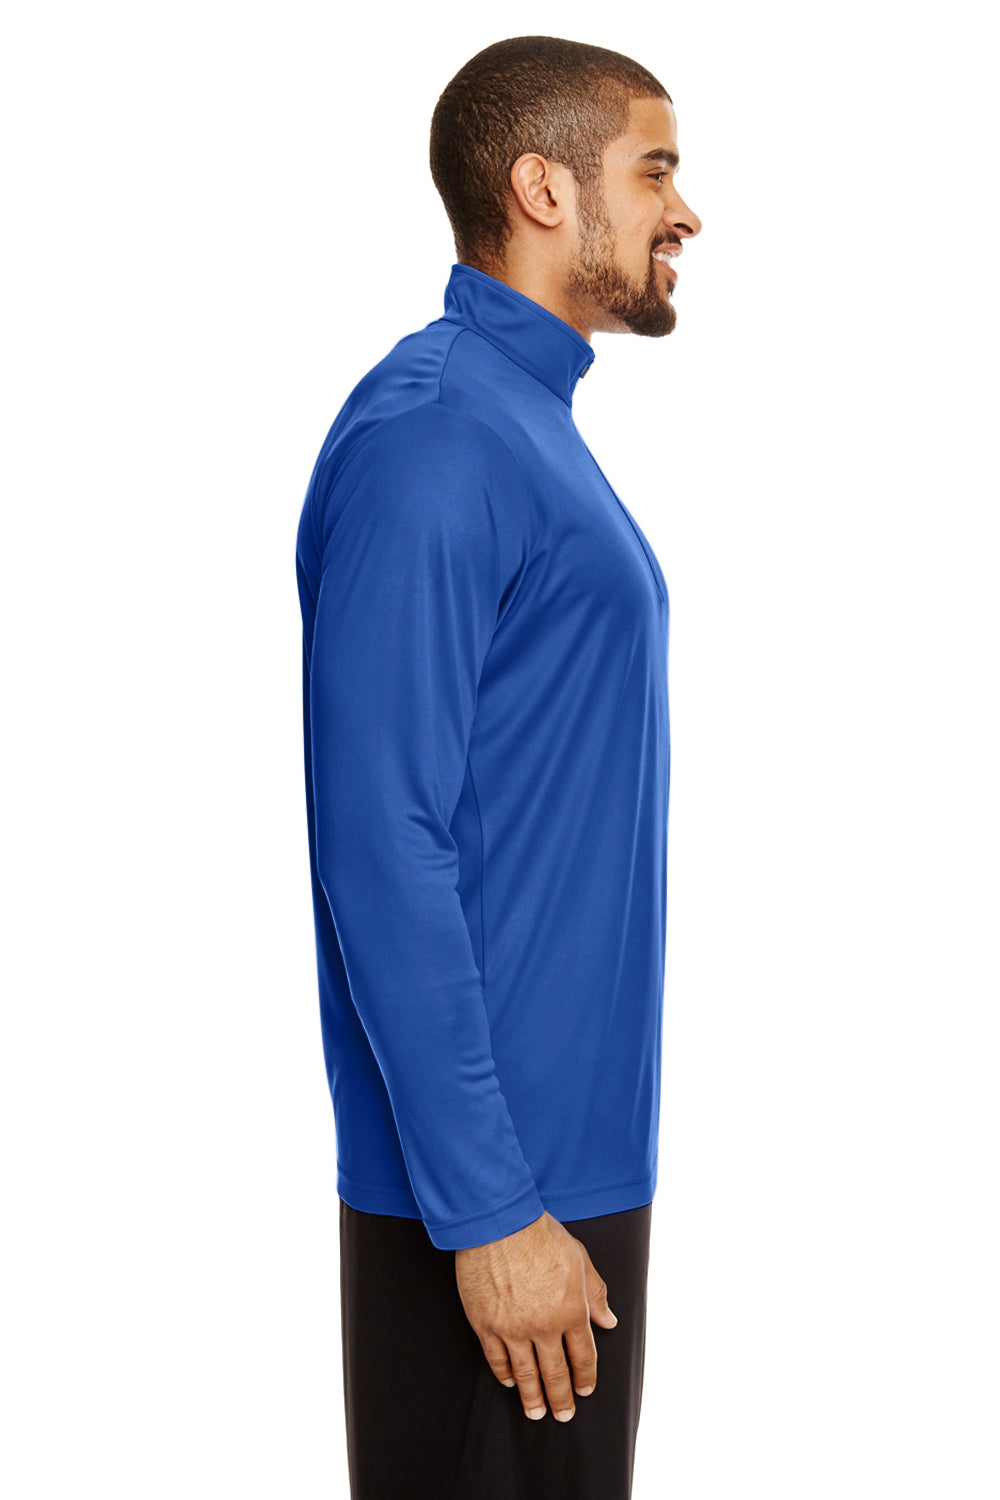 Team 365 TT31 Mens Zone Performance Moisture Wicking 1/4 Zip Sweatshirt Royal Blue Side